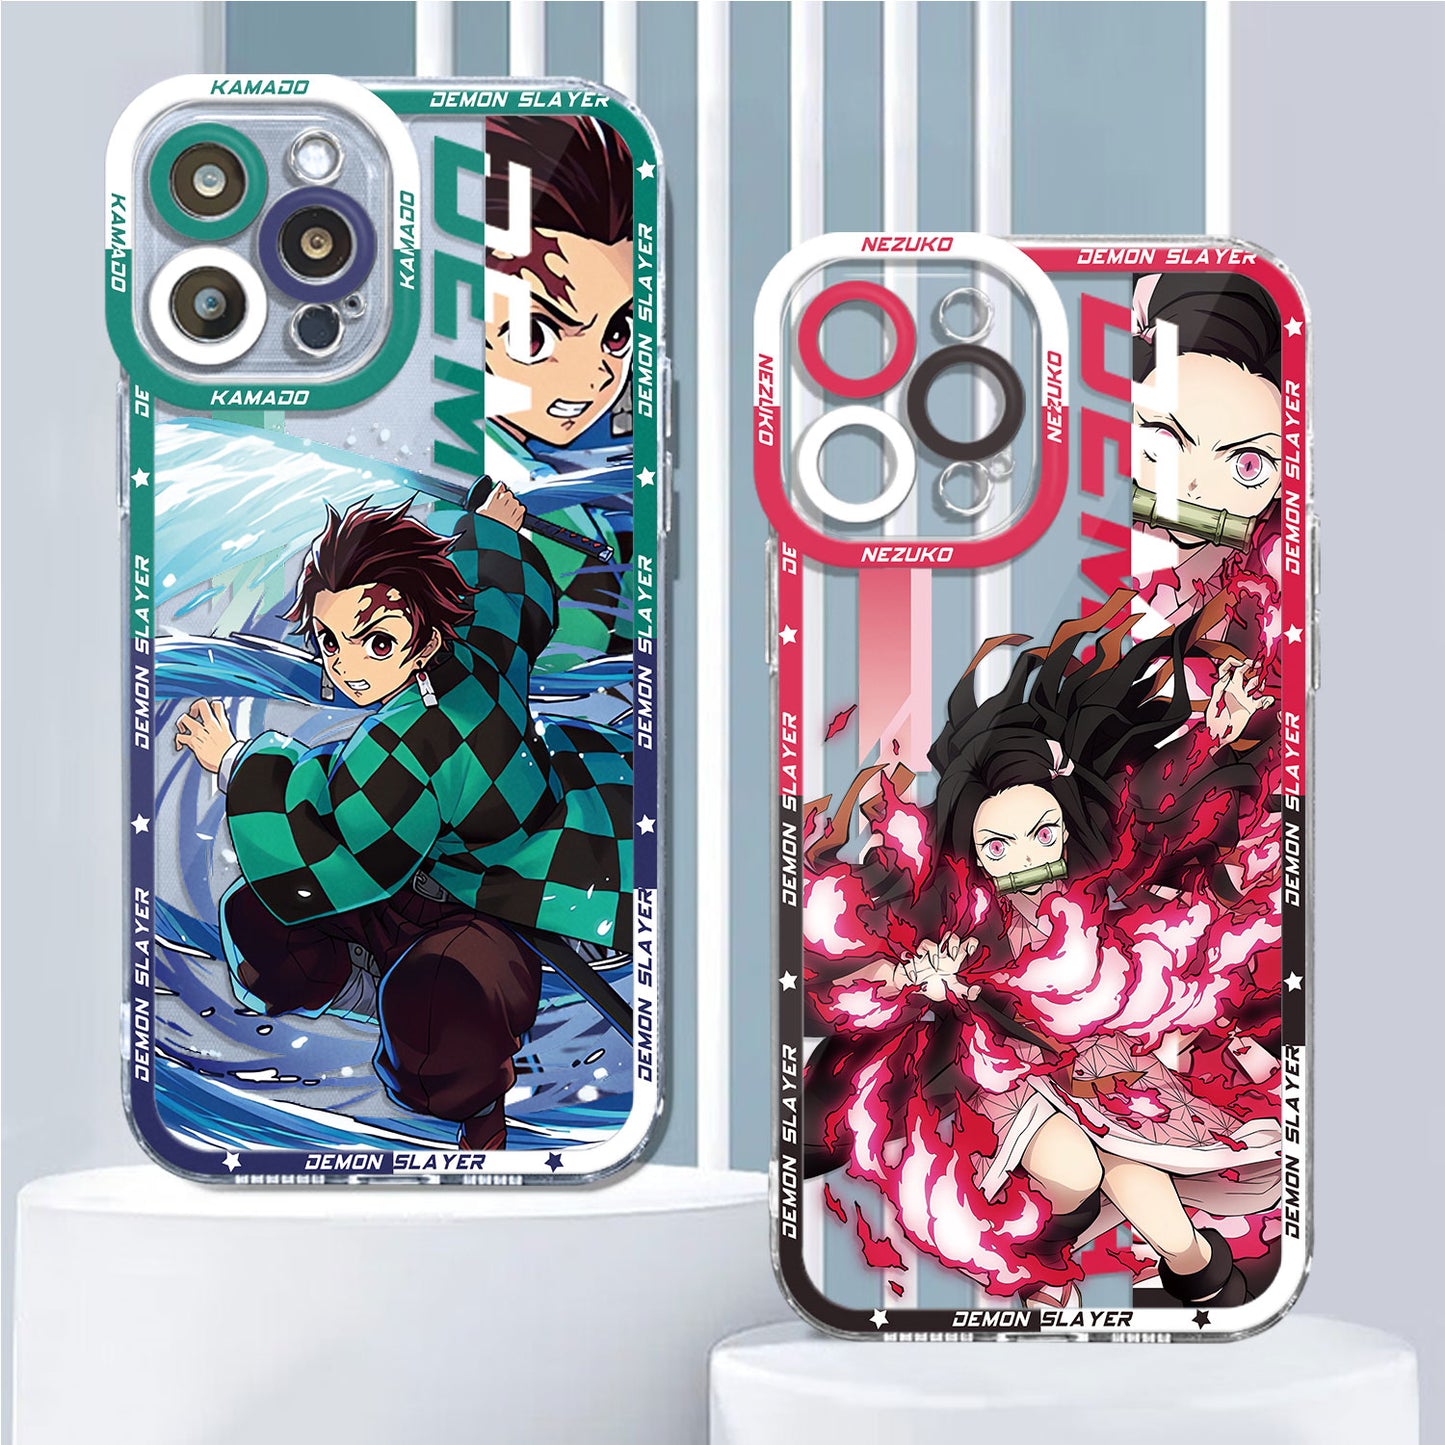 Cute Kawaii Anime Girl Phone Case For iPhone 6 7 8 Plus X XS XR 11